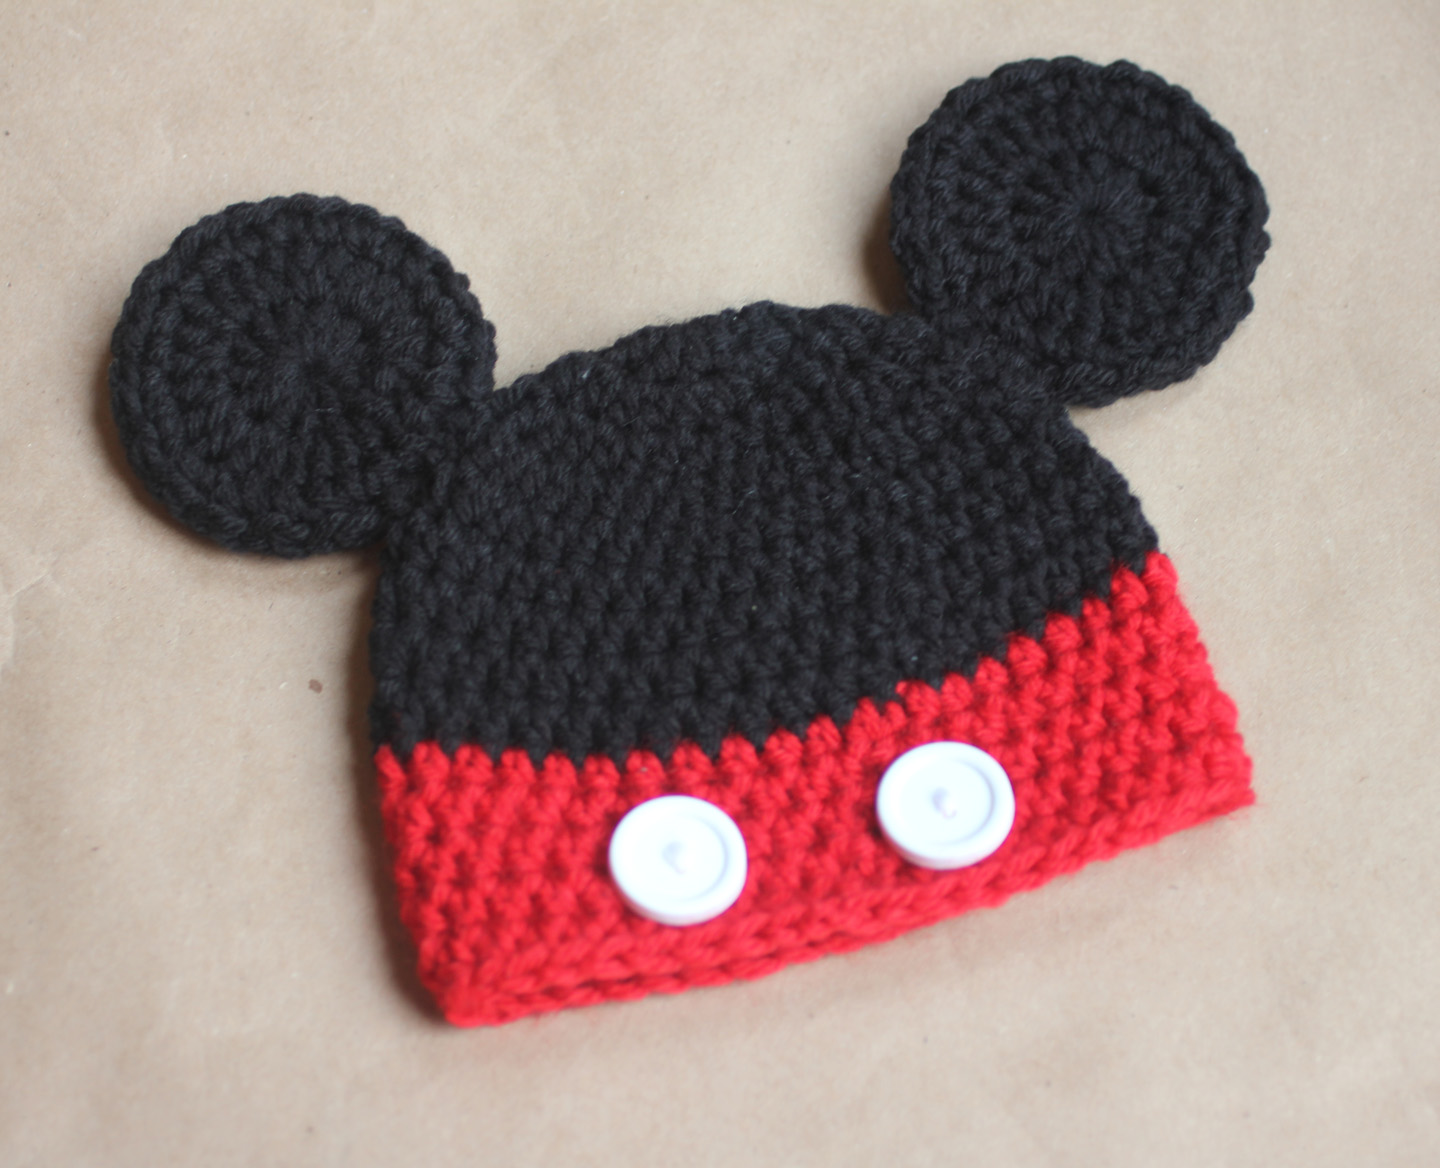 Mickey Mouse al crochet - Imagui